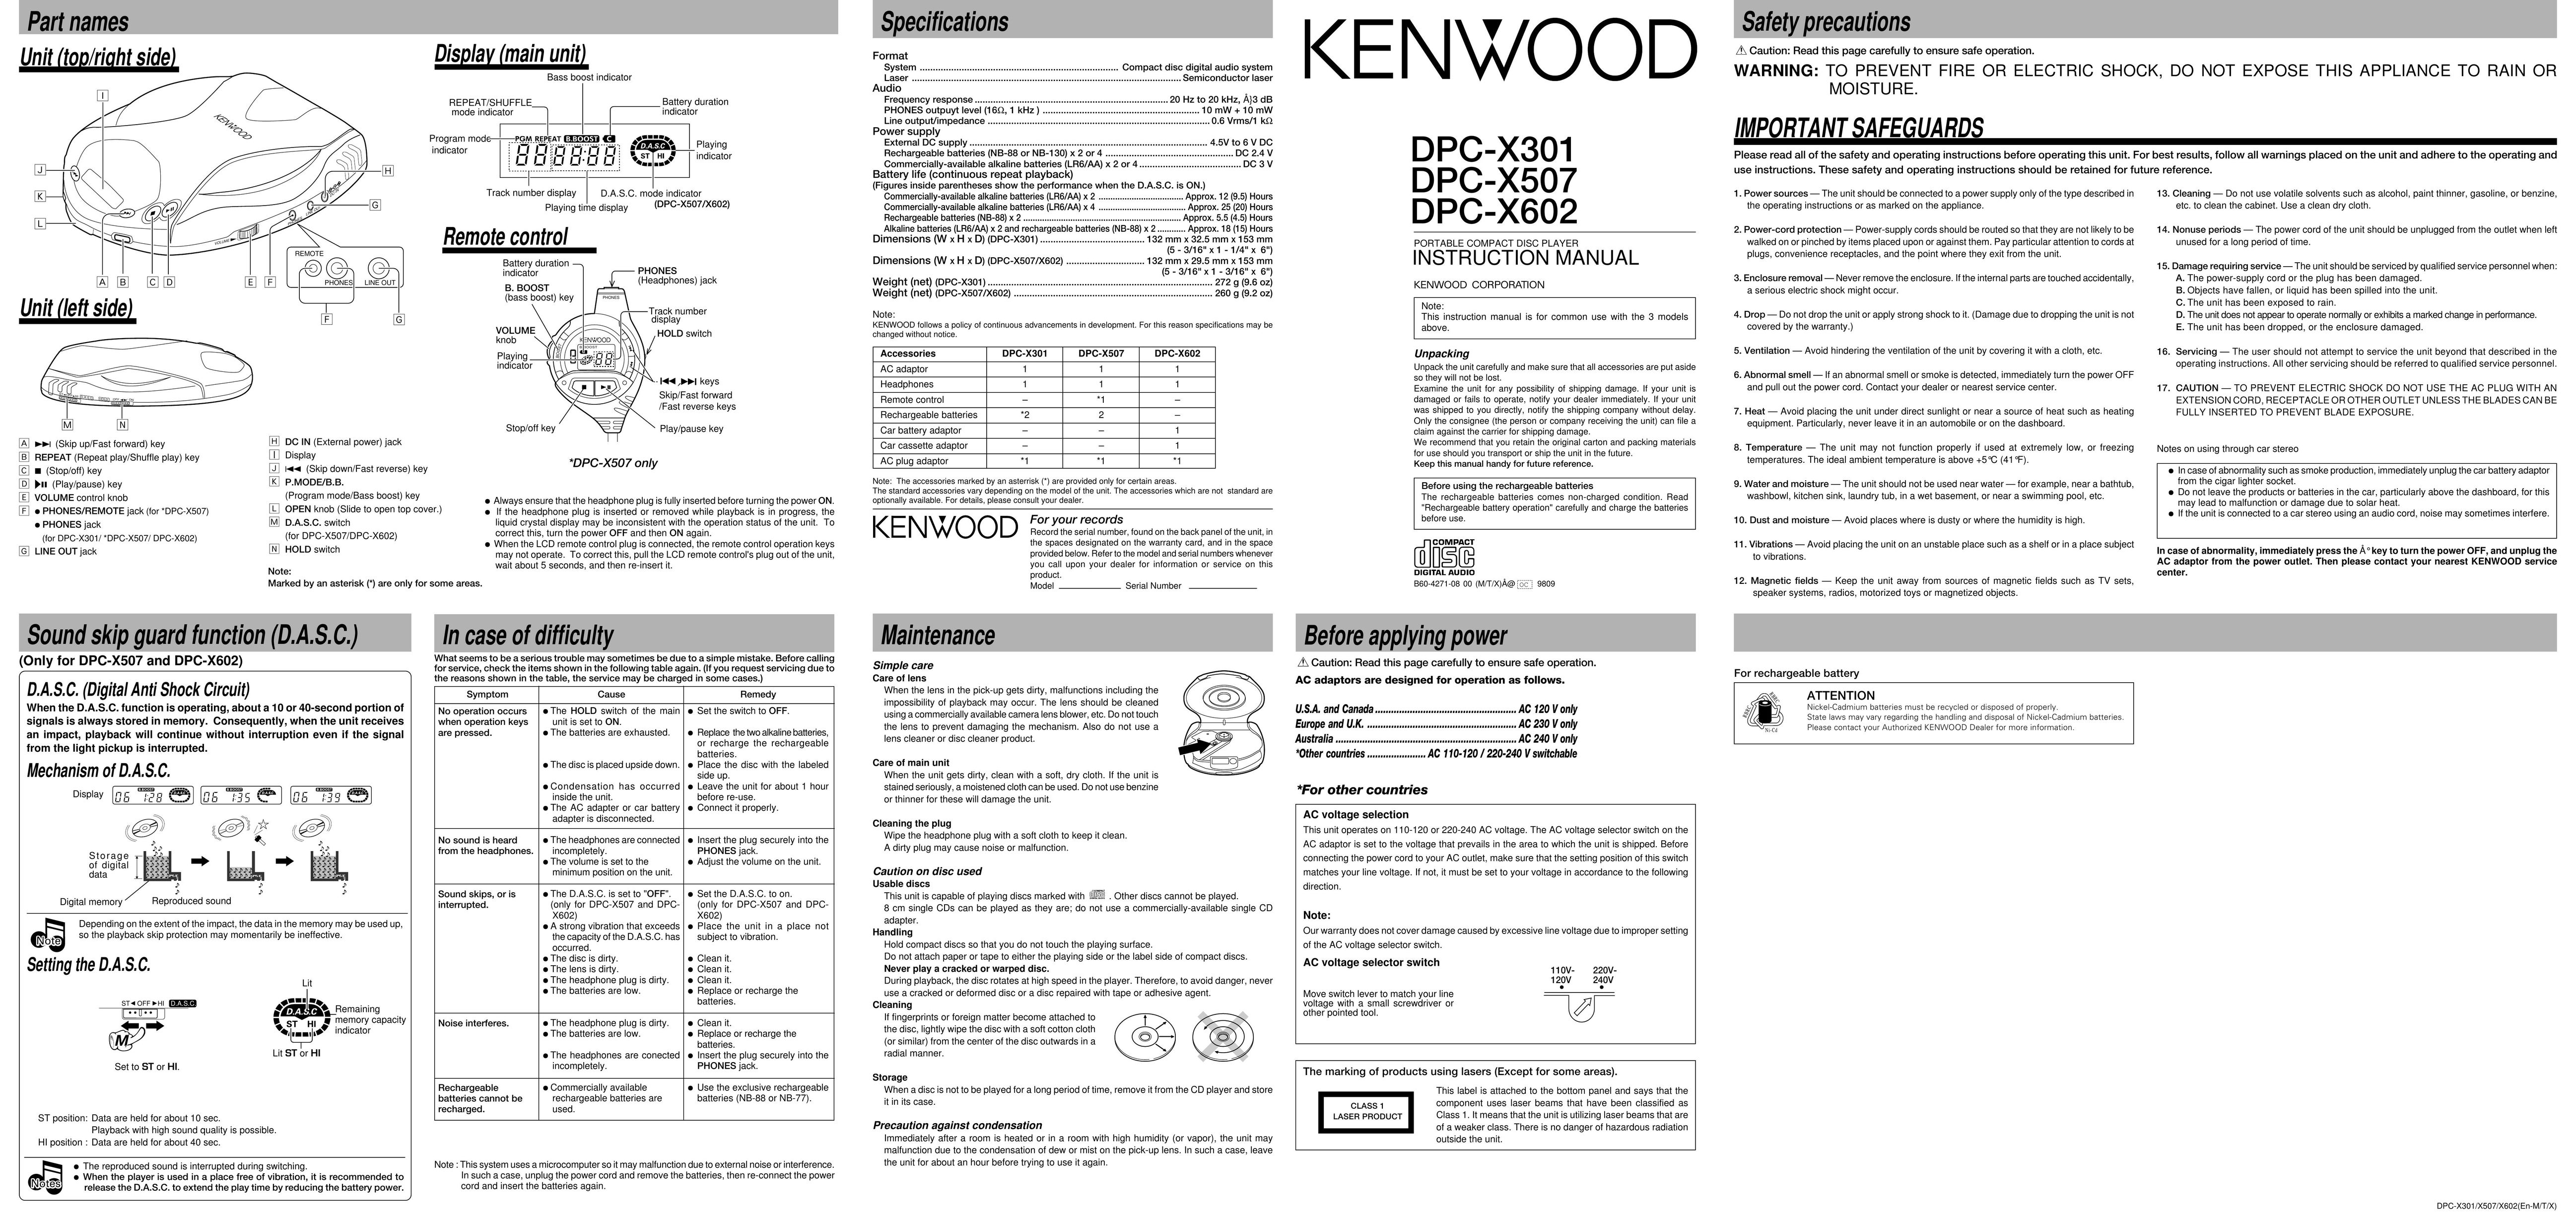 Kenwood DPC-X507 MP3 Player User Manual